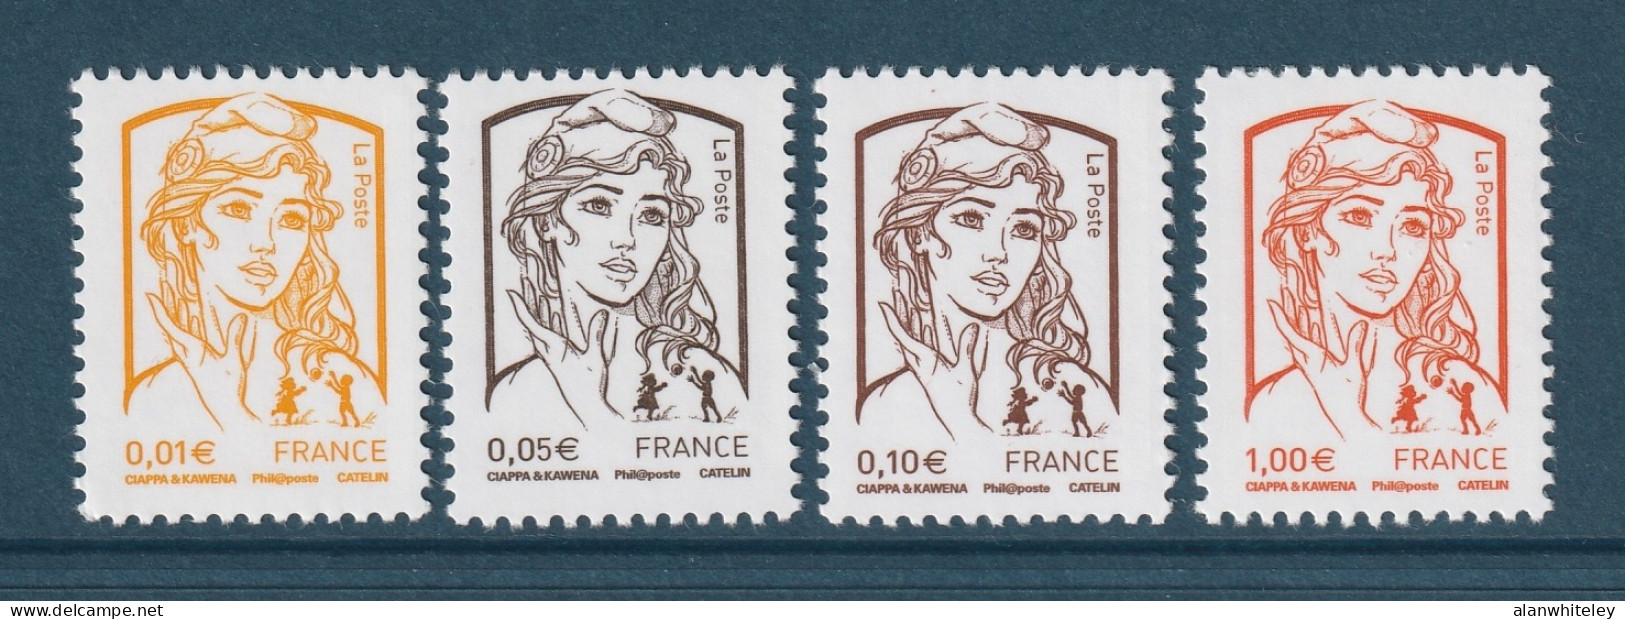 FRANCE 2013 Definitives / Marianne De Ciappa-Kawena 1c/5c/10c/€1: Set Of 4 Stamps UM/MNH - 2013-2018 Marianne De Ciappa-Kawena